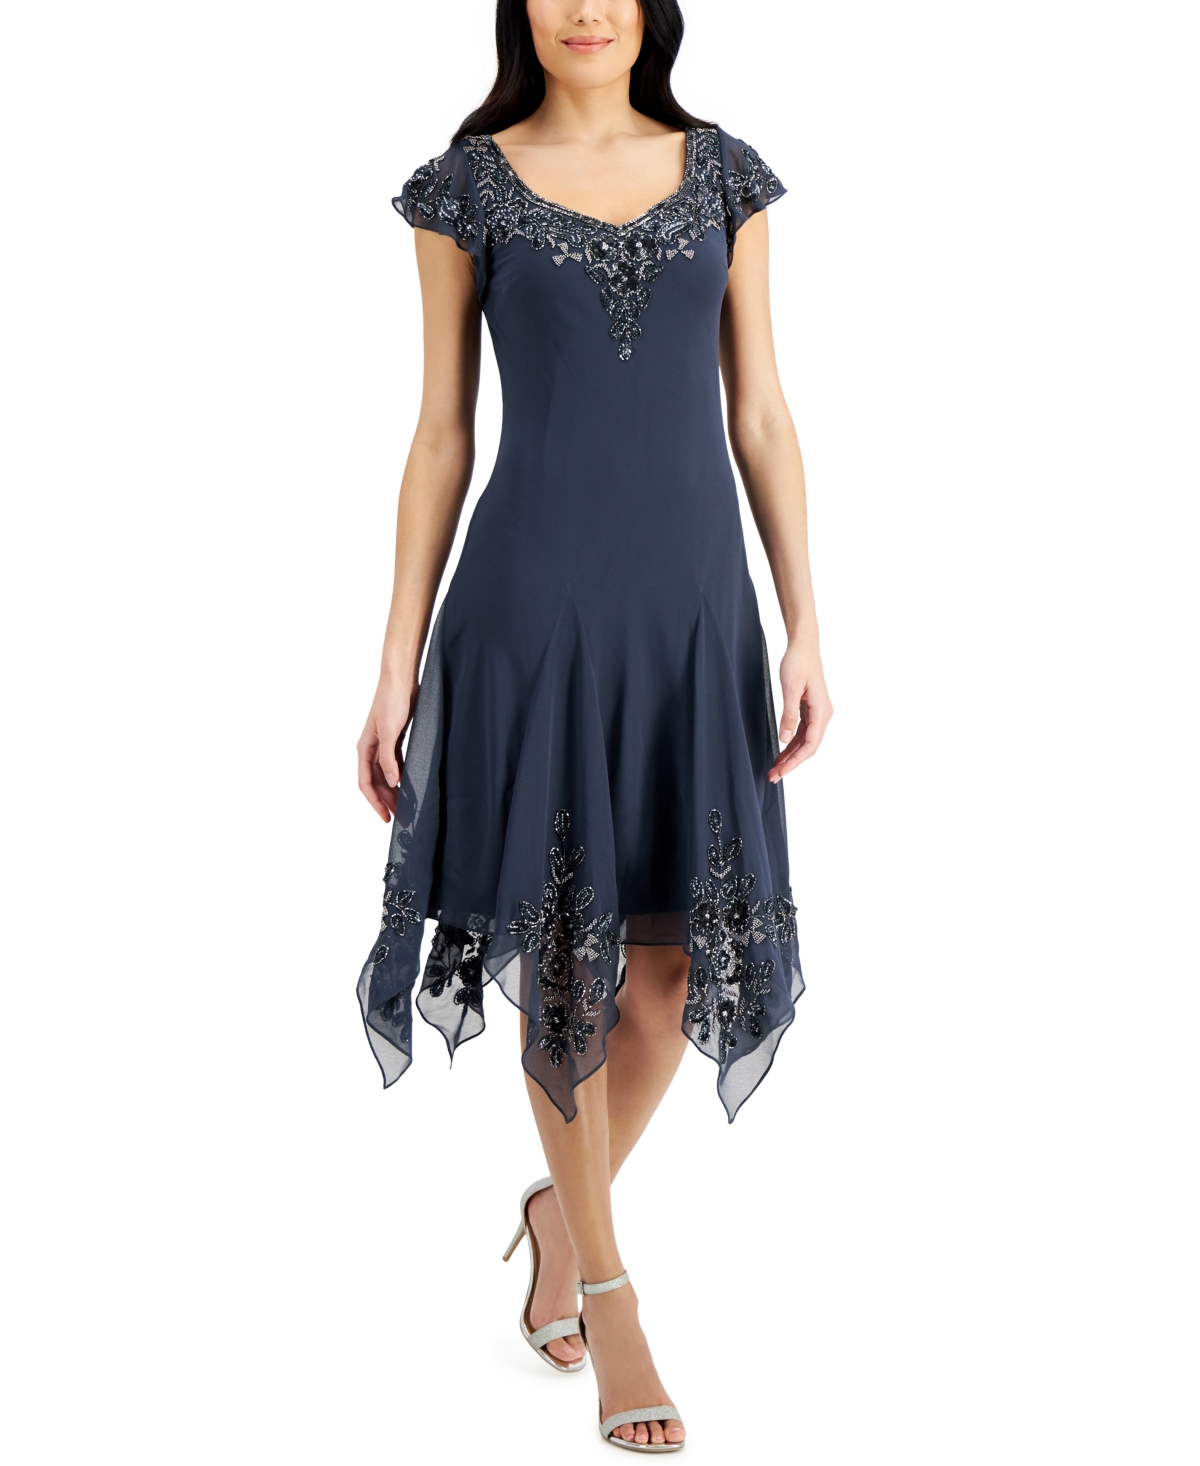 Charleston Dress: Fringe Flapper Dress